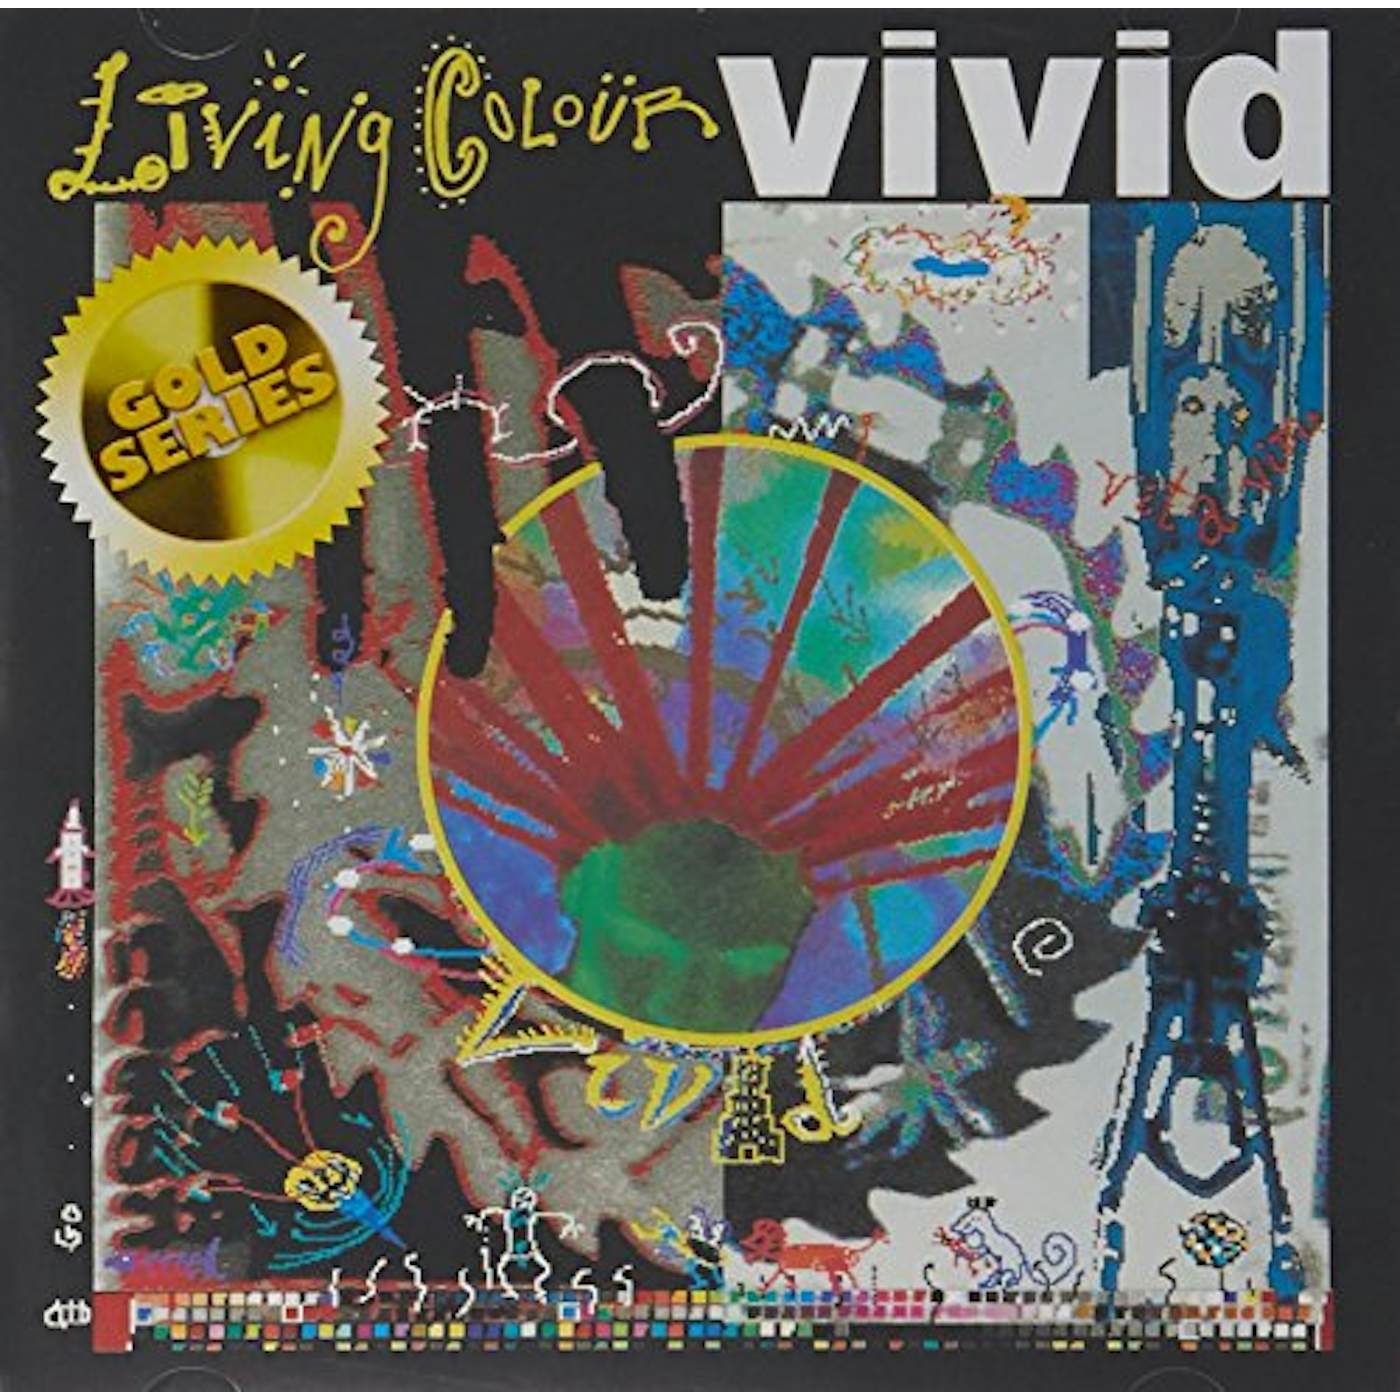 Living Colour VIVID (GOLD SERIES) CD